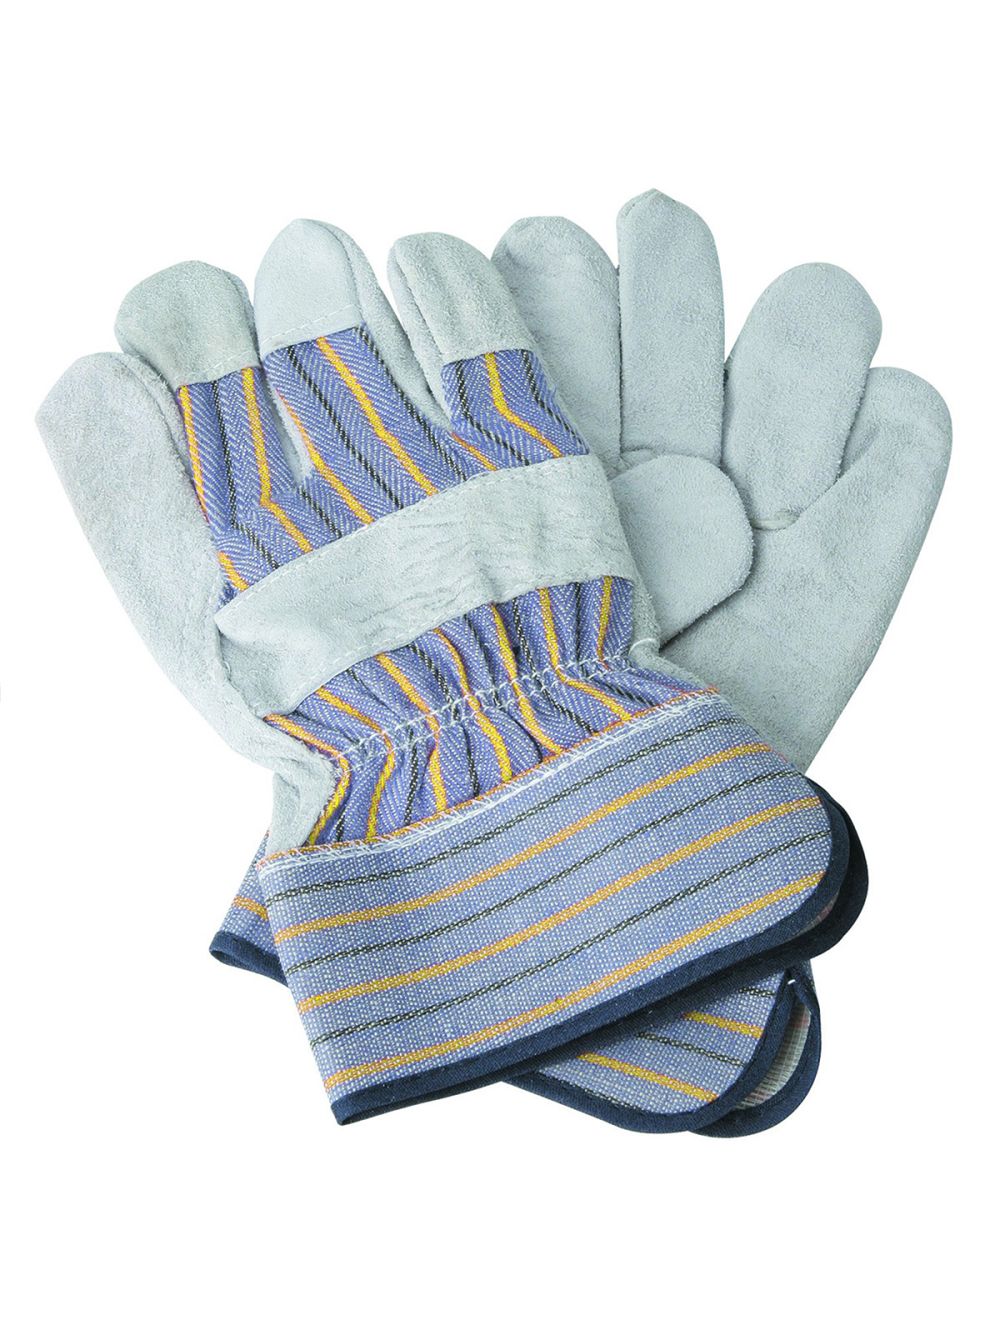 Leather Palm Work Gloves, Medium, Large, X Large - Parish Supply